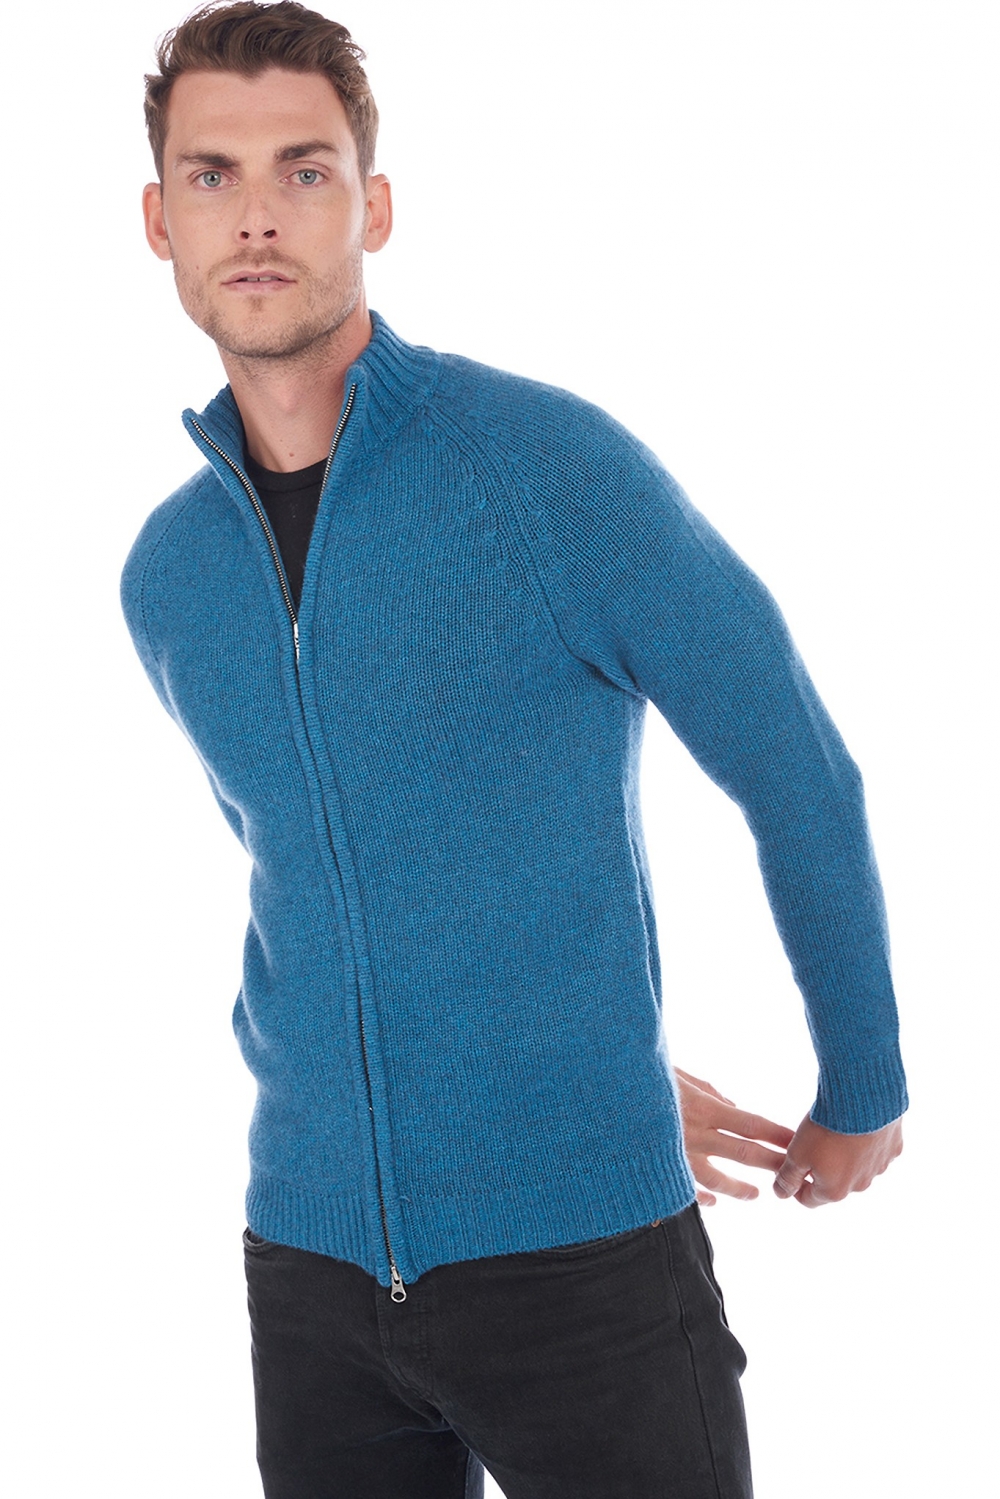 Cashmere men waistcoat sleeveless sweaters argos manor blue l